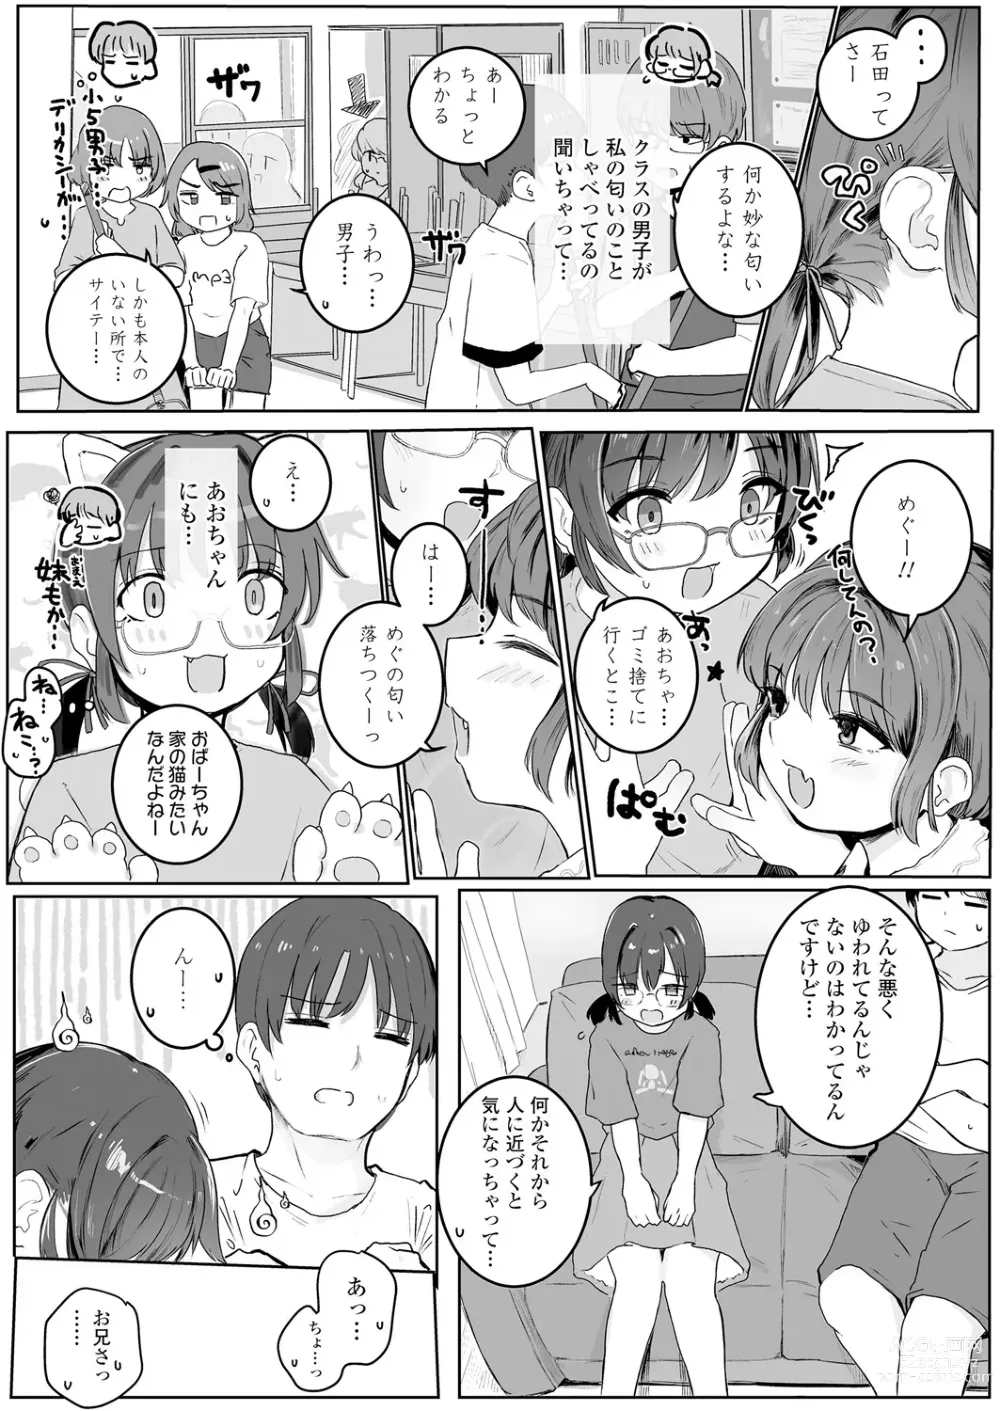 Page 5 of manga めぐみちゃんの気になるコト